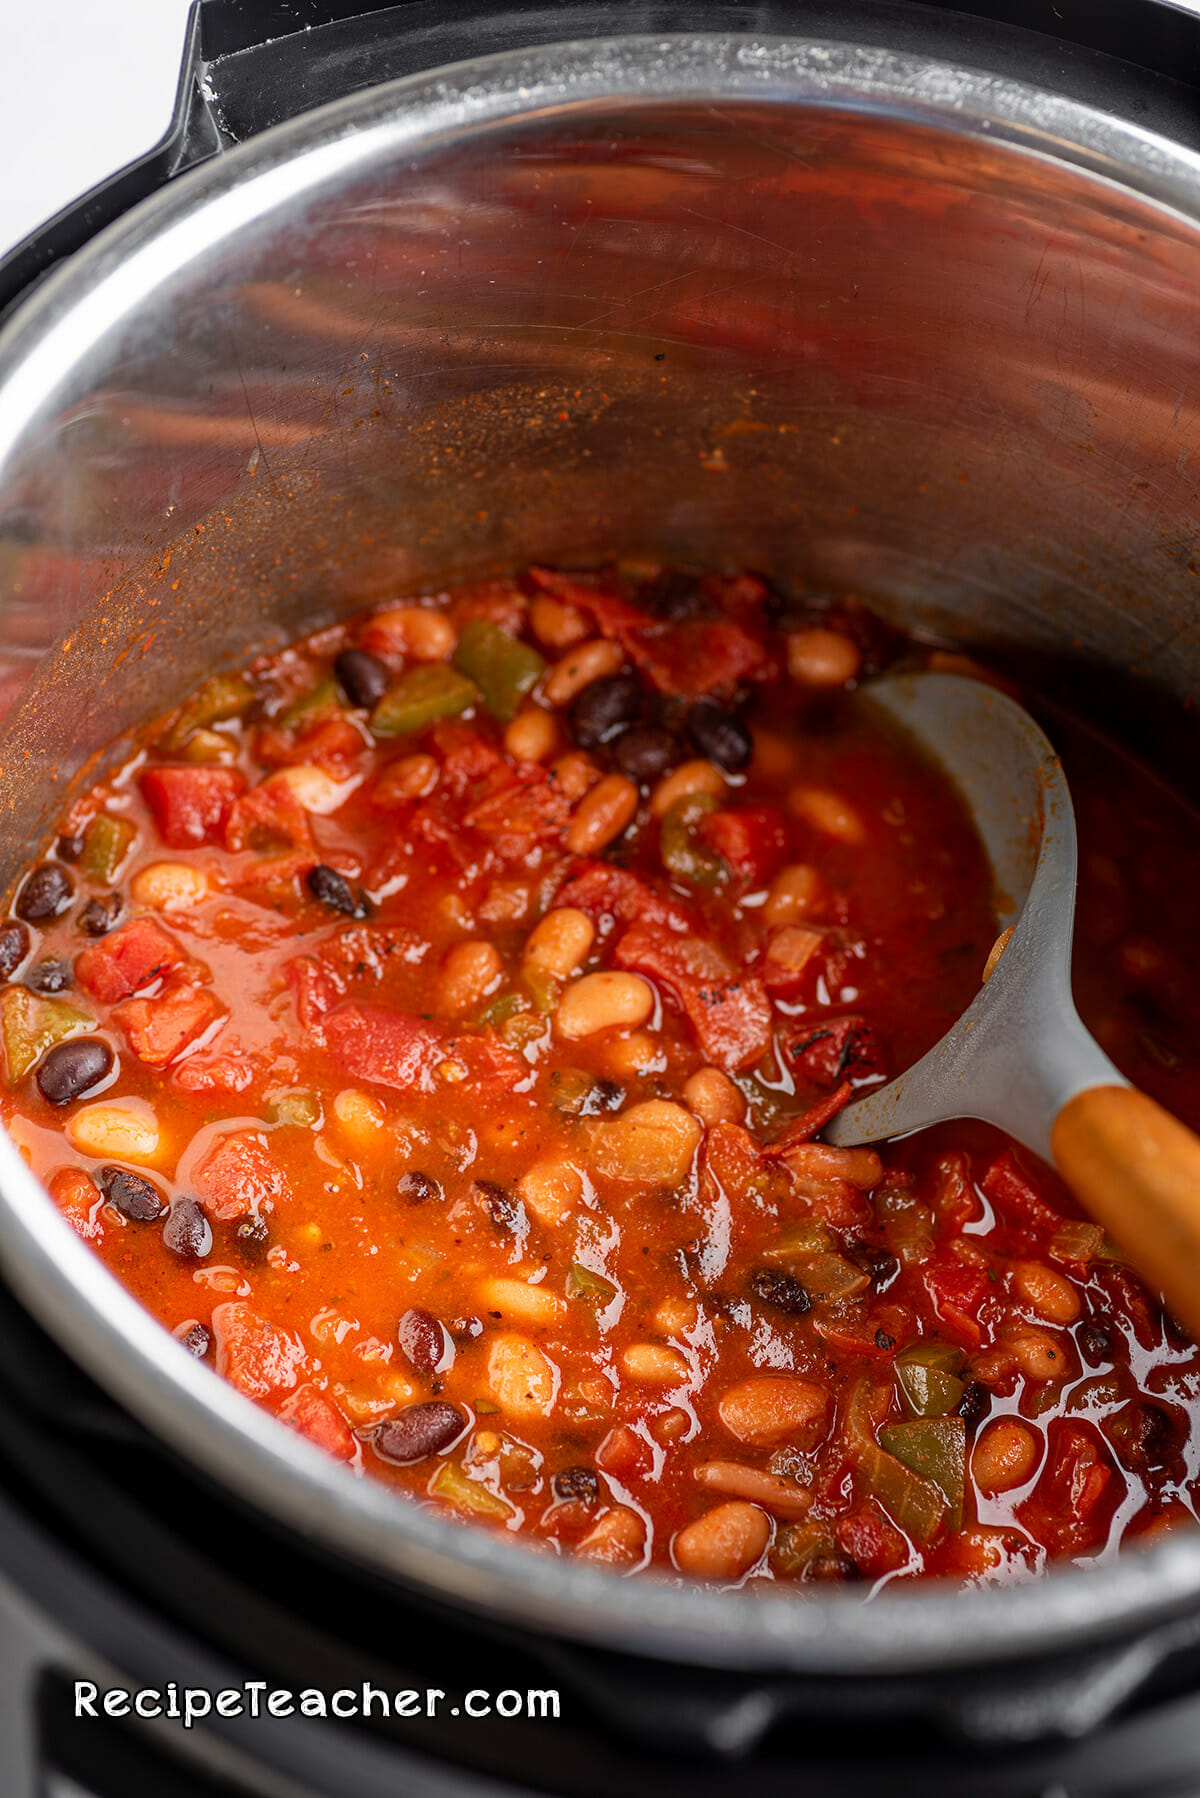 Recipe for Instant Pot vegetarian chili